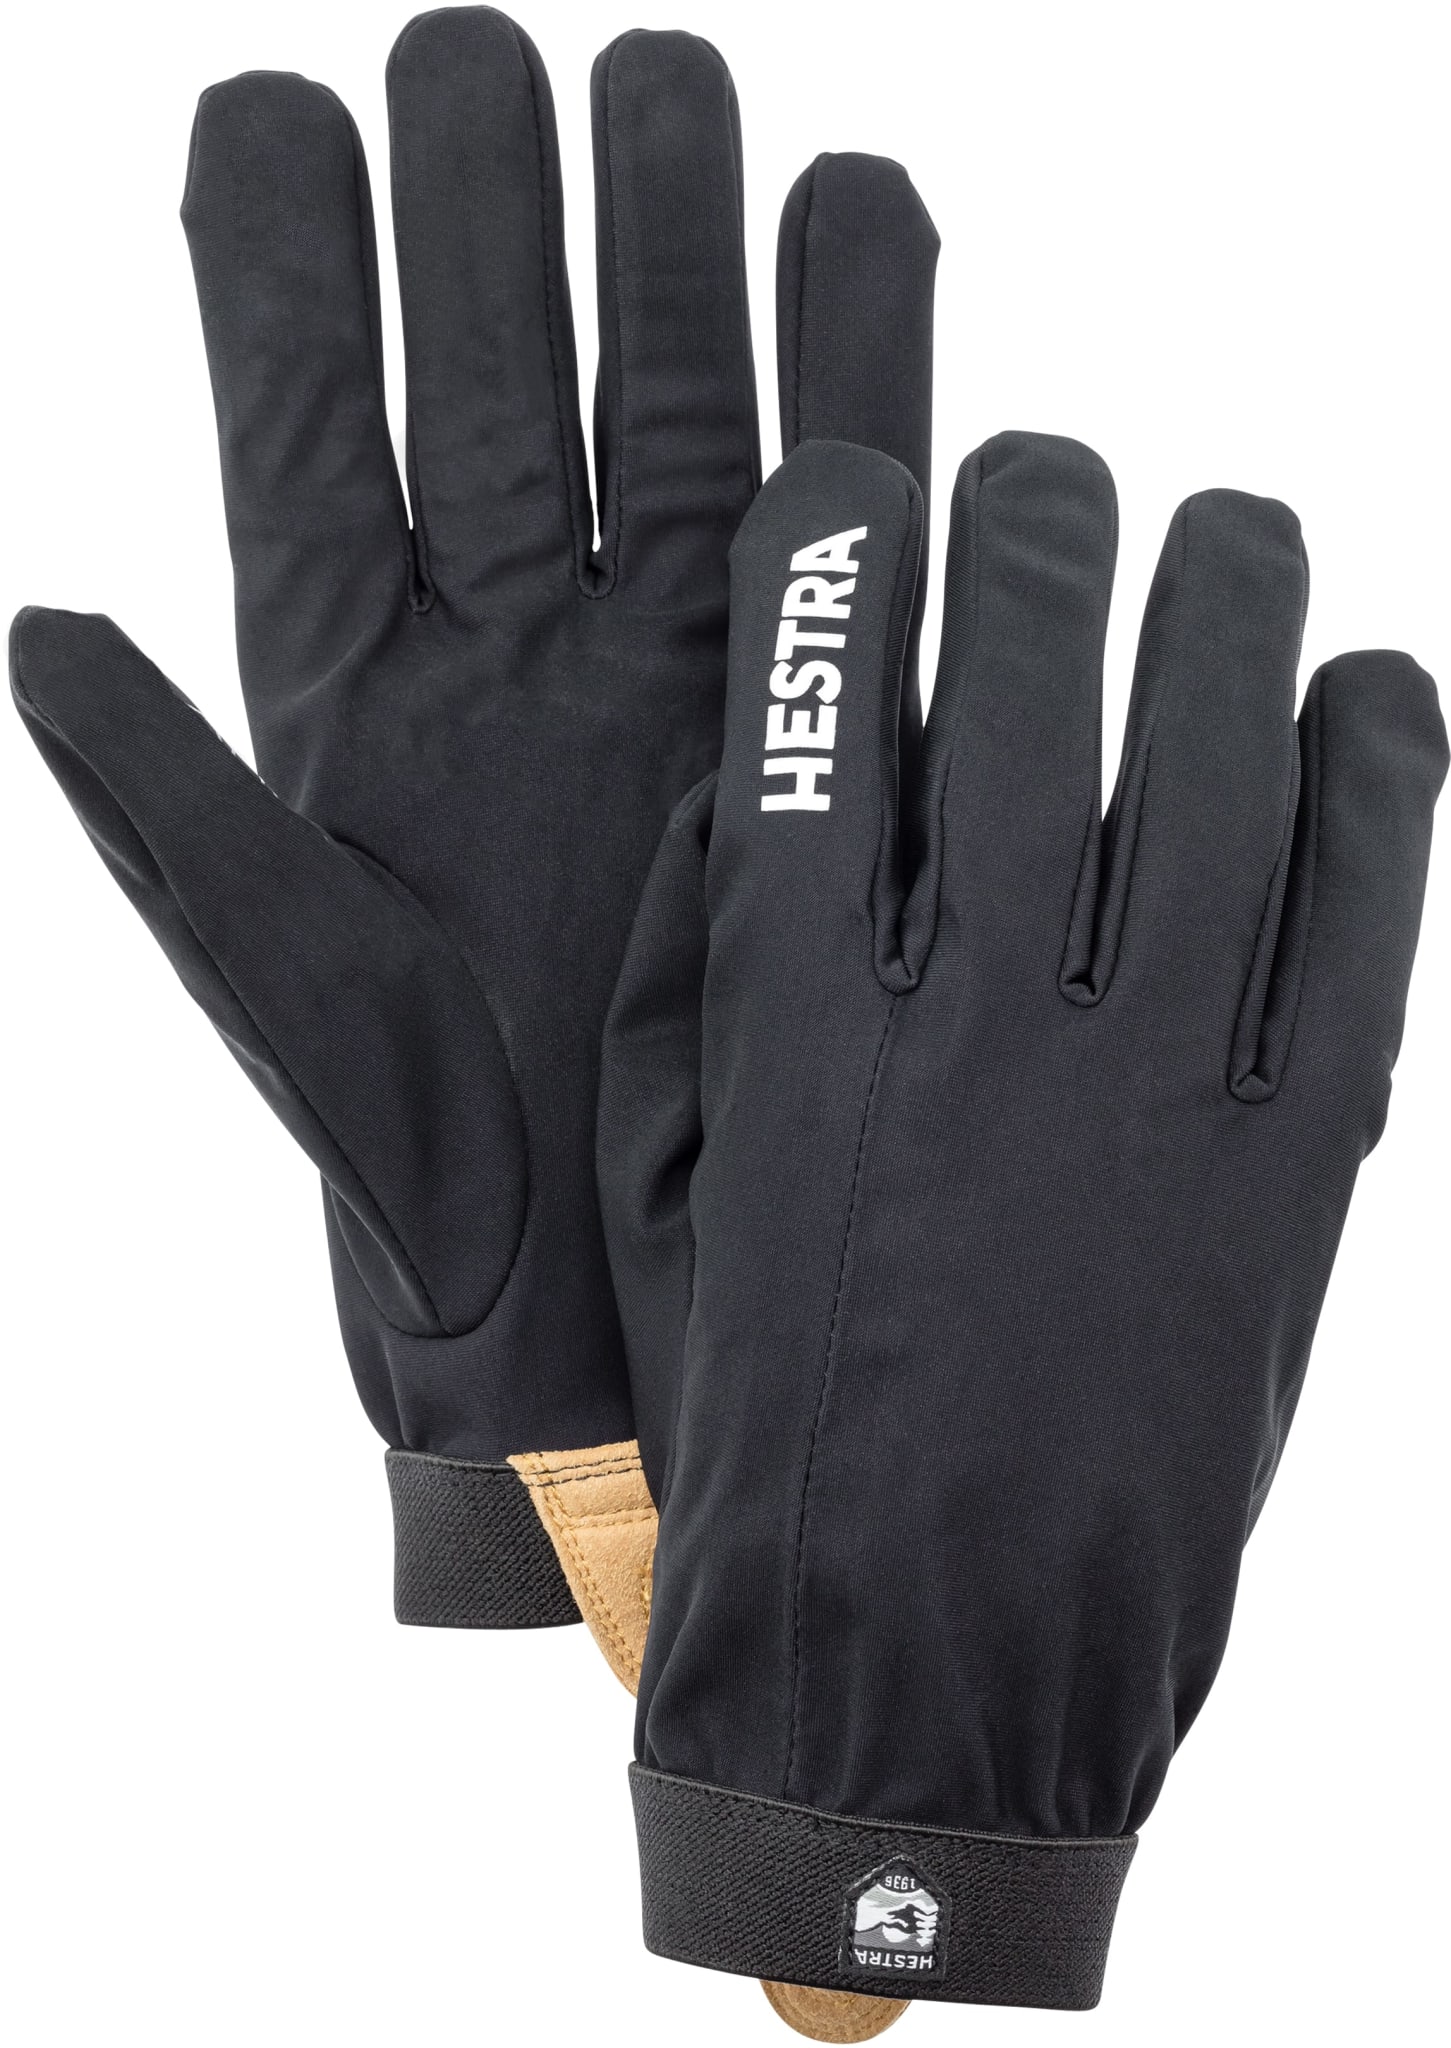 Nimbus Glove